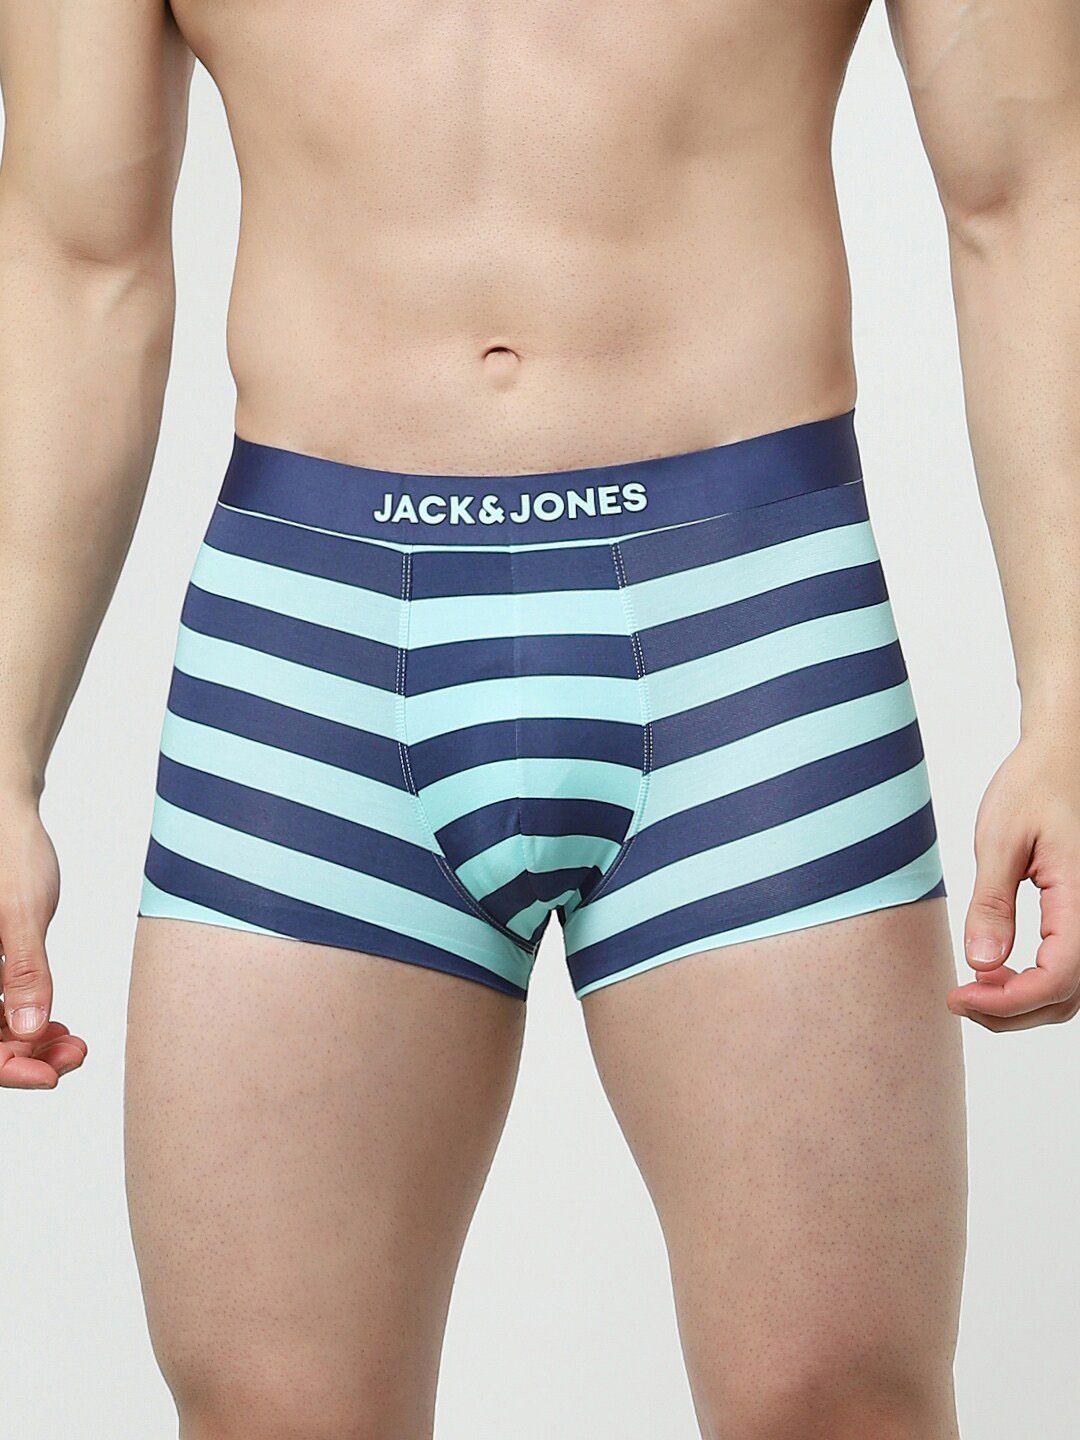 Jack & Jones Men Mid Rise Striped Trunks 1310050001